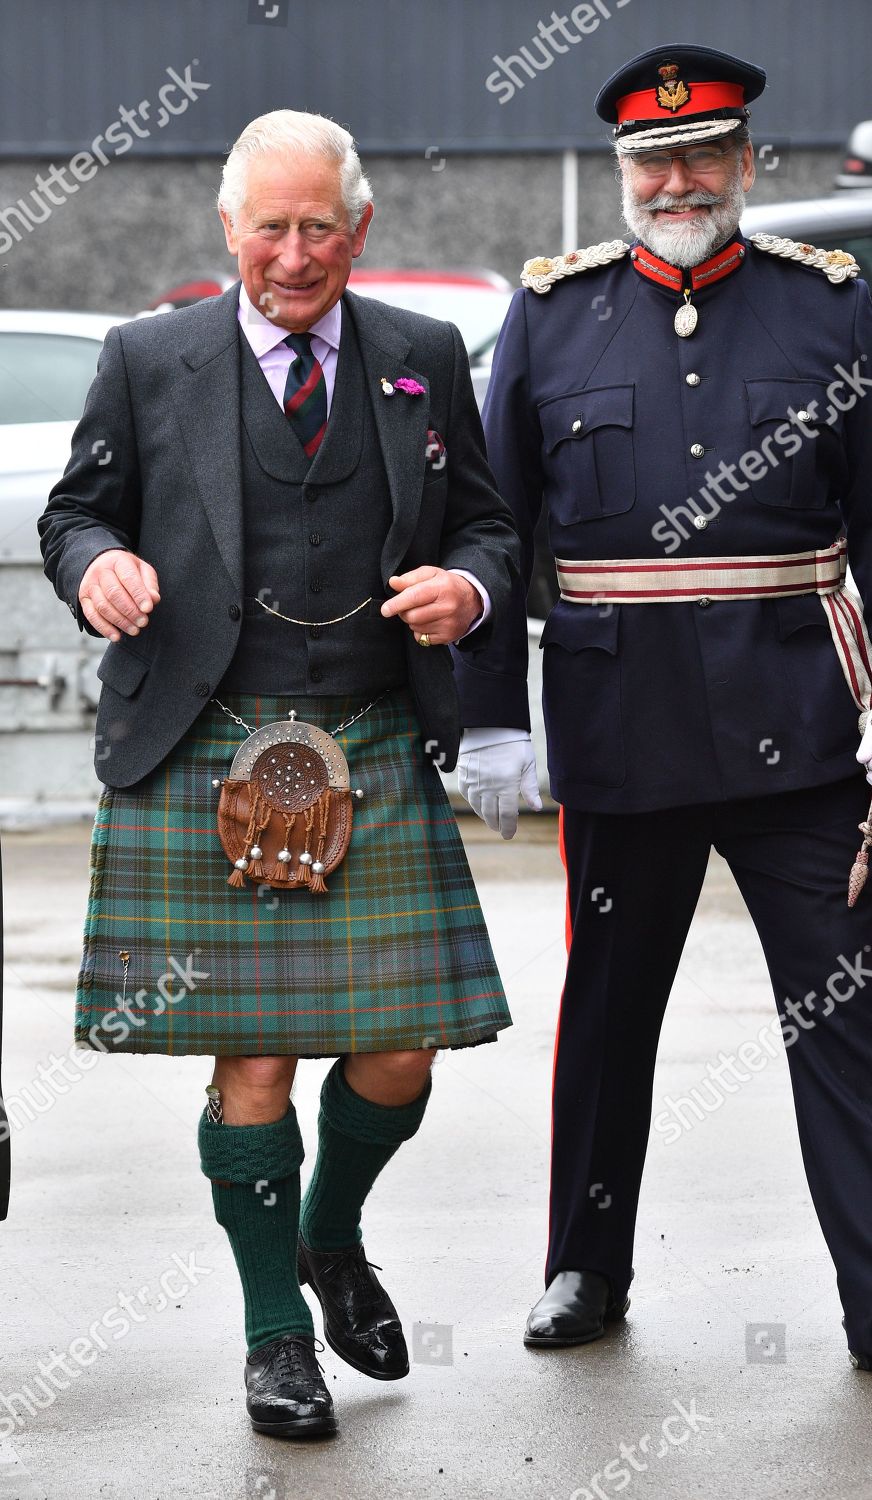 prince-charles-visits-caithness-scotland-uk-shutterstock-editorial-10349568e.jpg